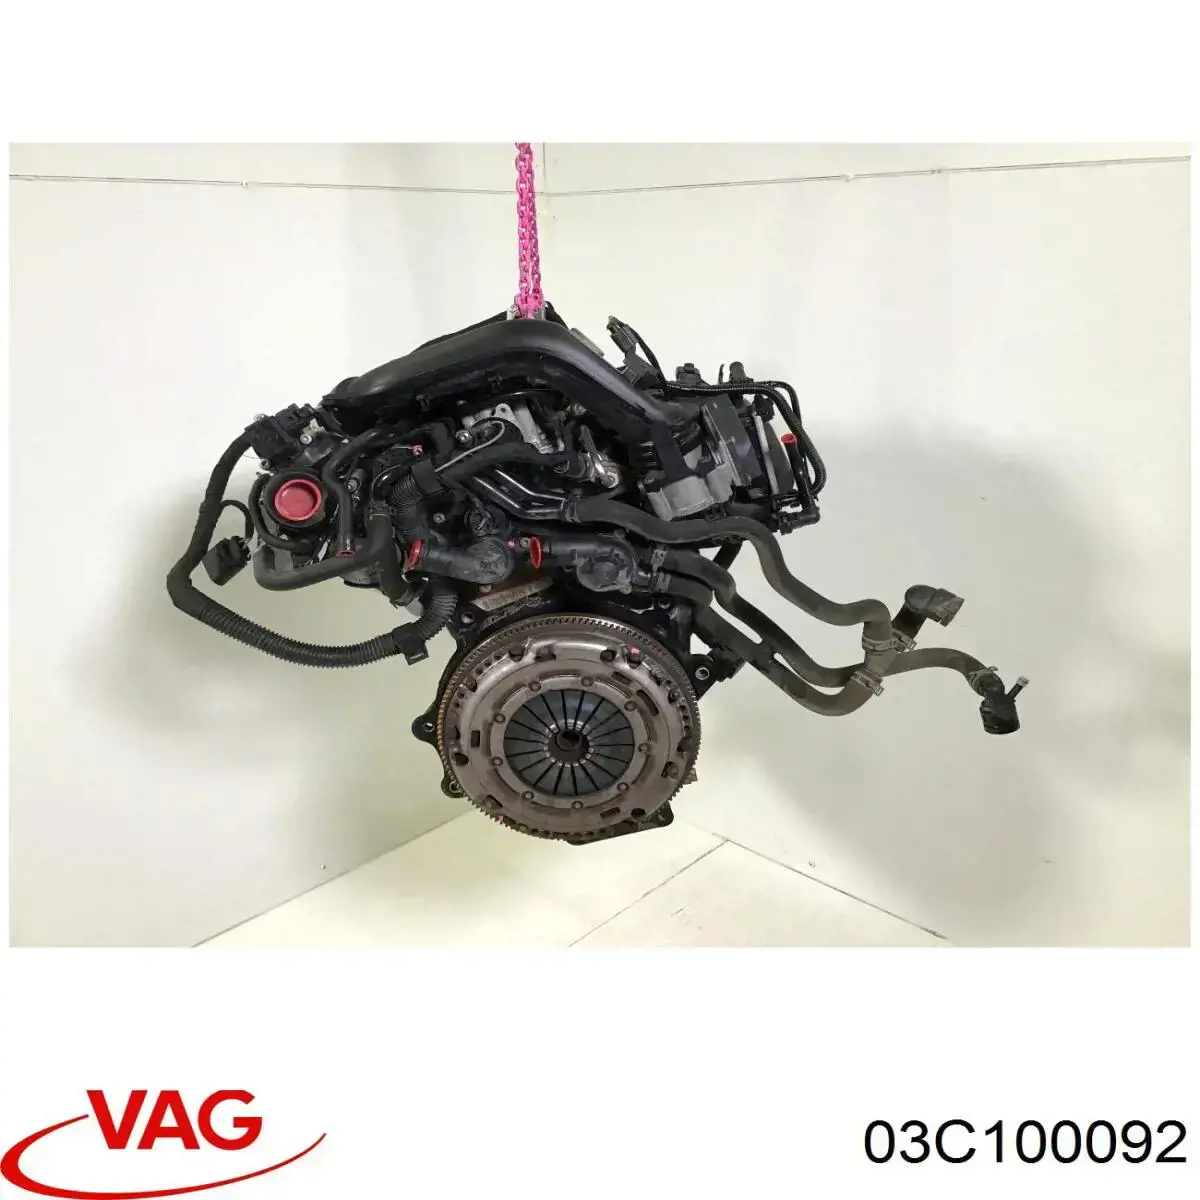 03C100092 VAG motor completo